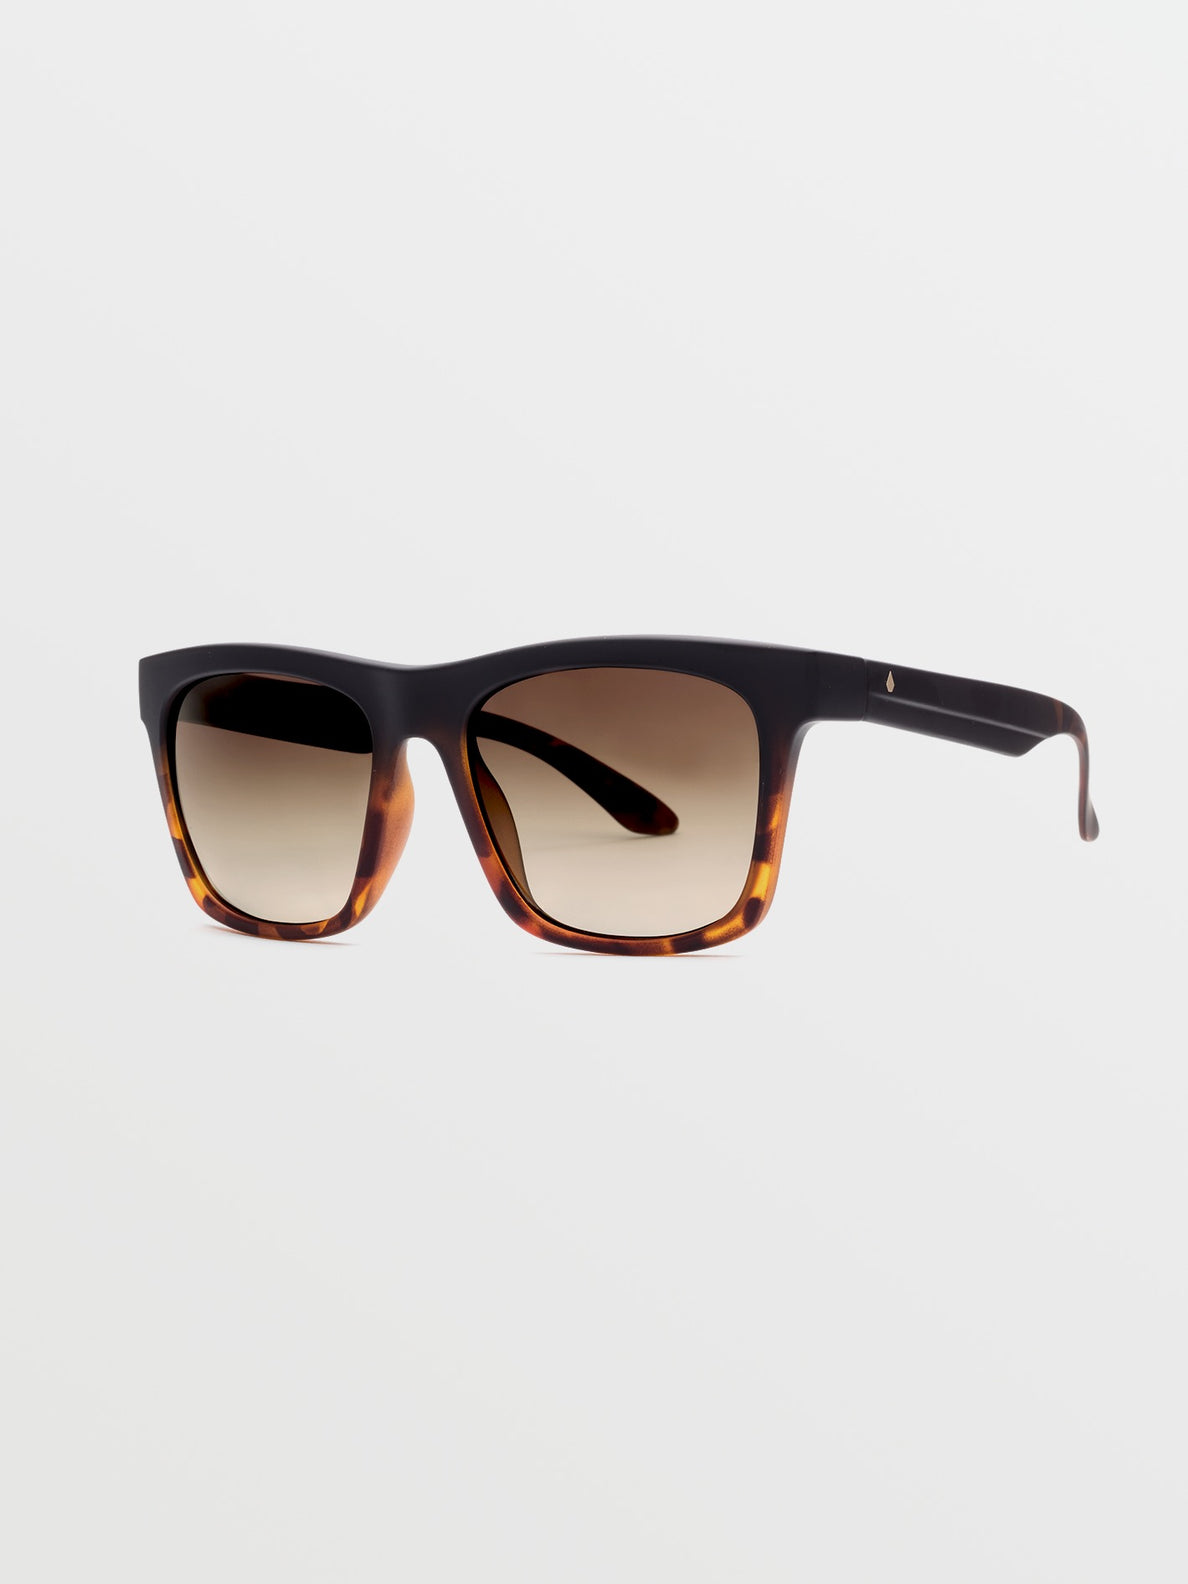 Gafas de sol Volcom Jewel - Matte Darkside/Bronze Fade Polarized | Gafas de sol | Volcom Shop | surfdevils.com